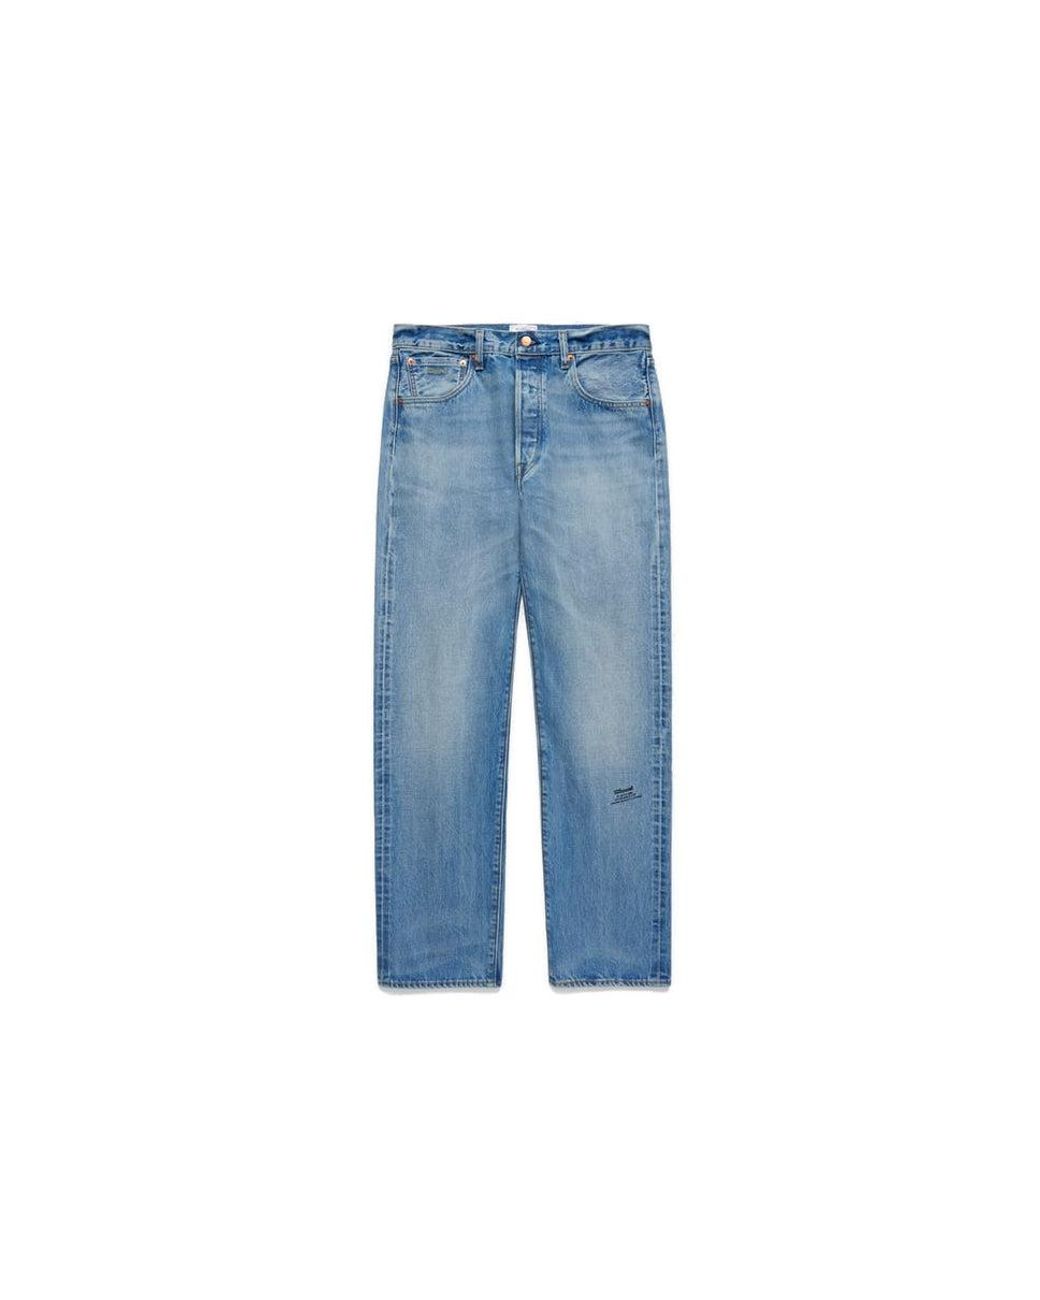 Levi's Jjjjound X Levi's 501 '93 Original Fit Jeans Medium Wash in